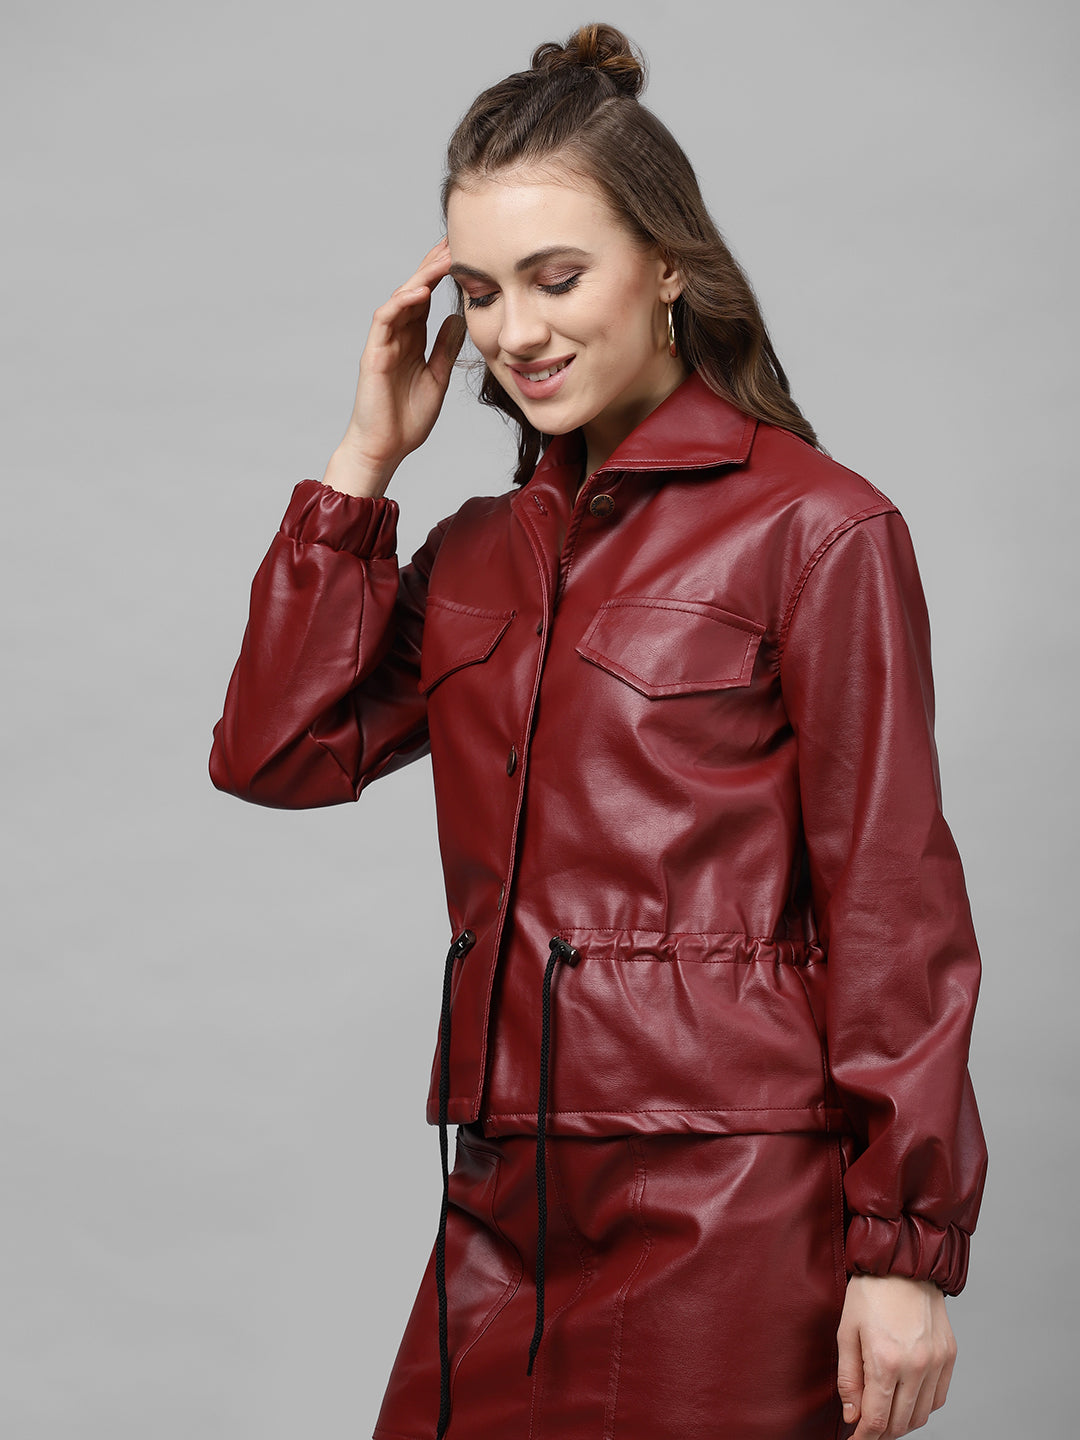 Athena Maroon Leather jacket with peplum and front drawstring detail - Athena Lifestyle